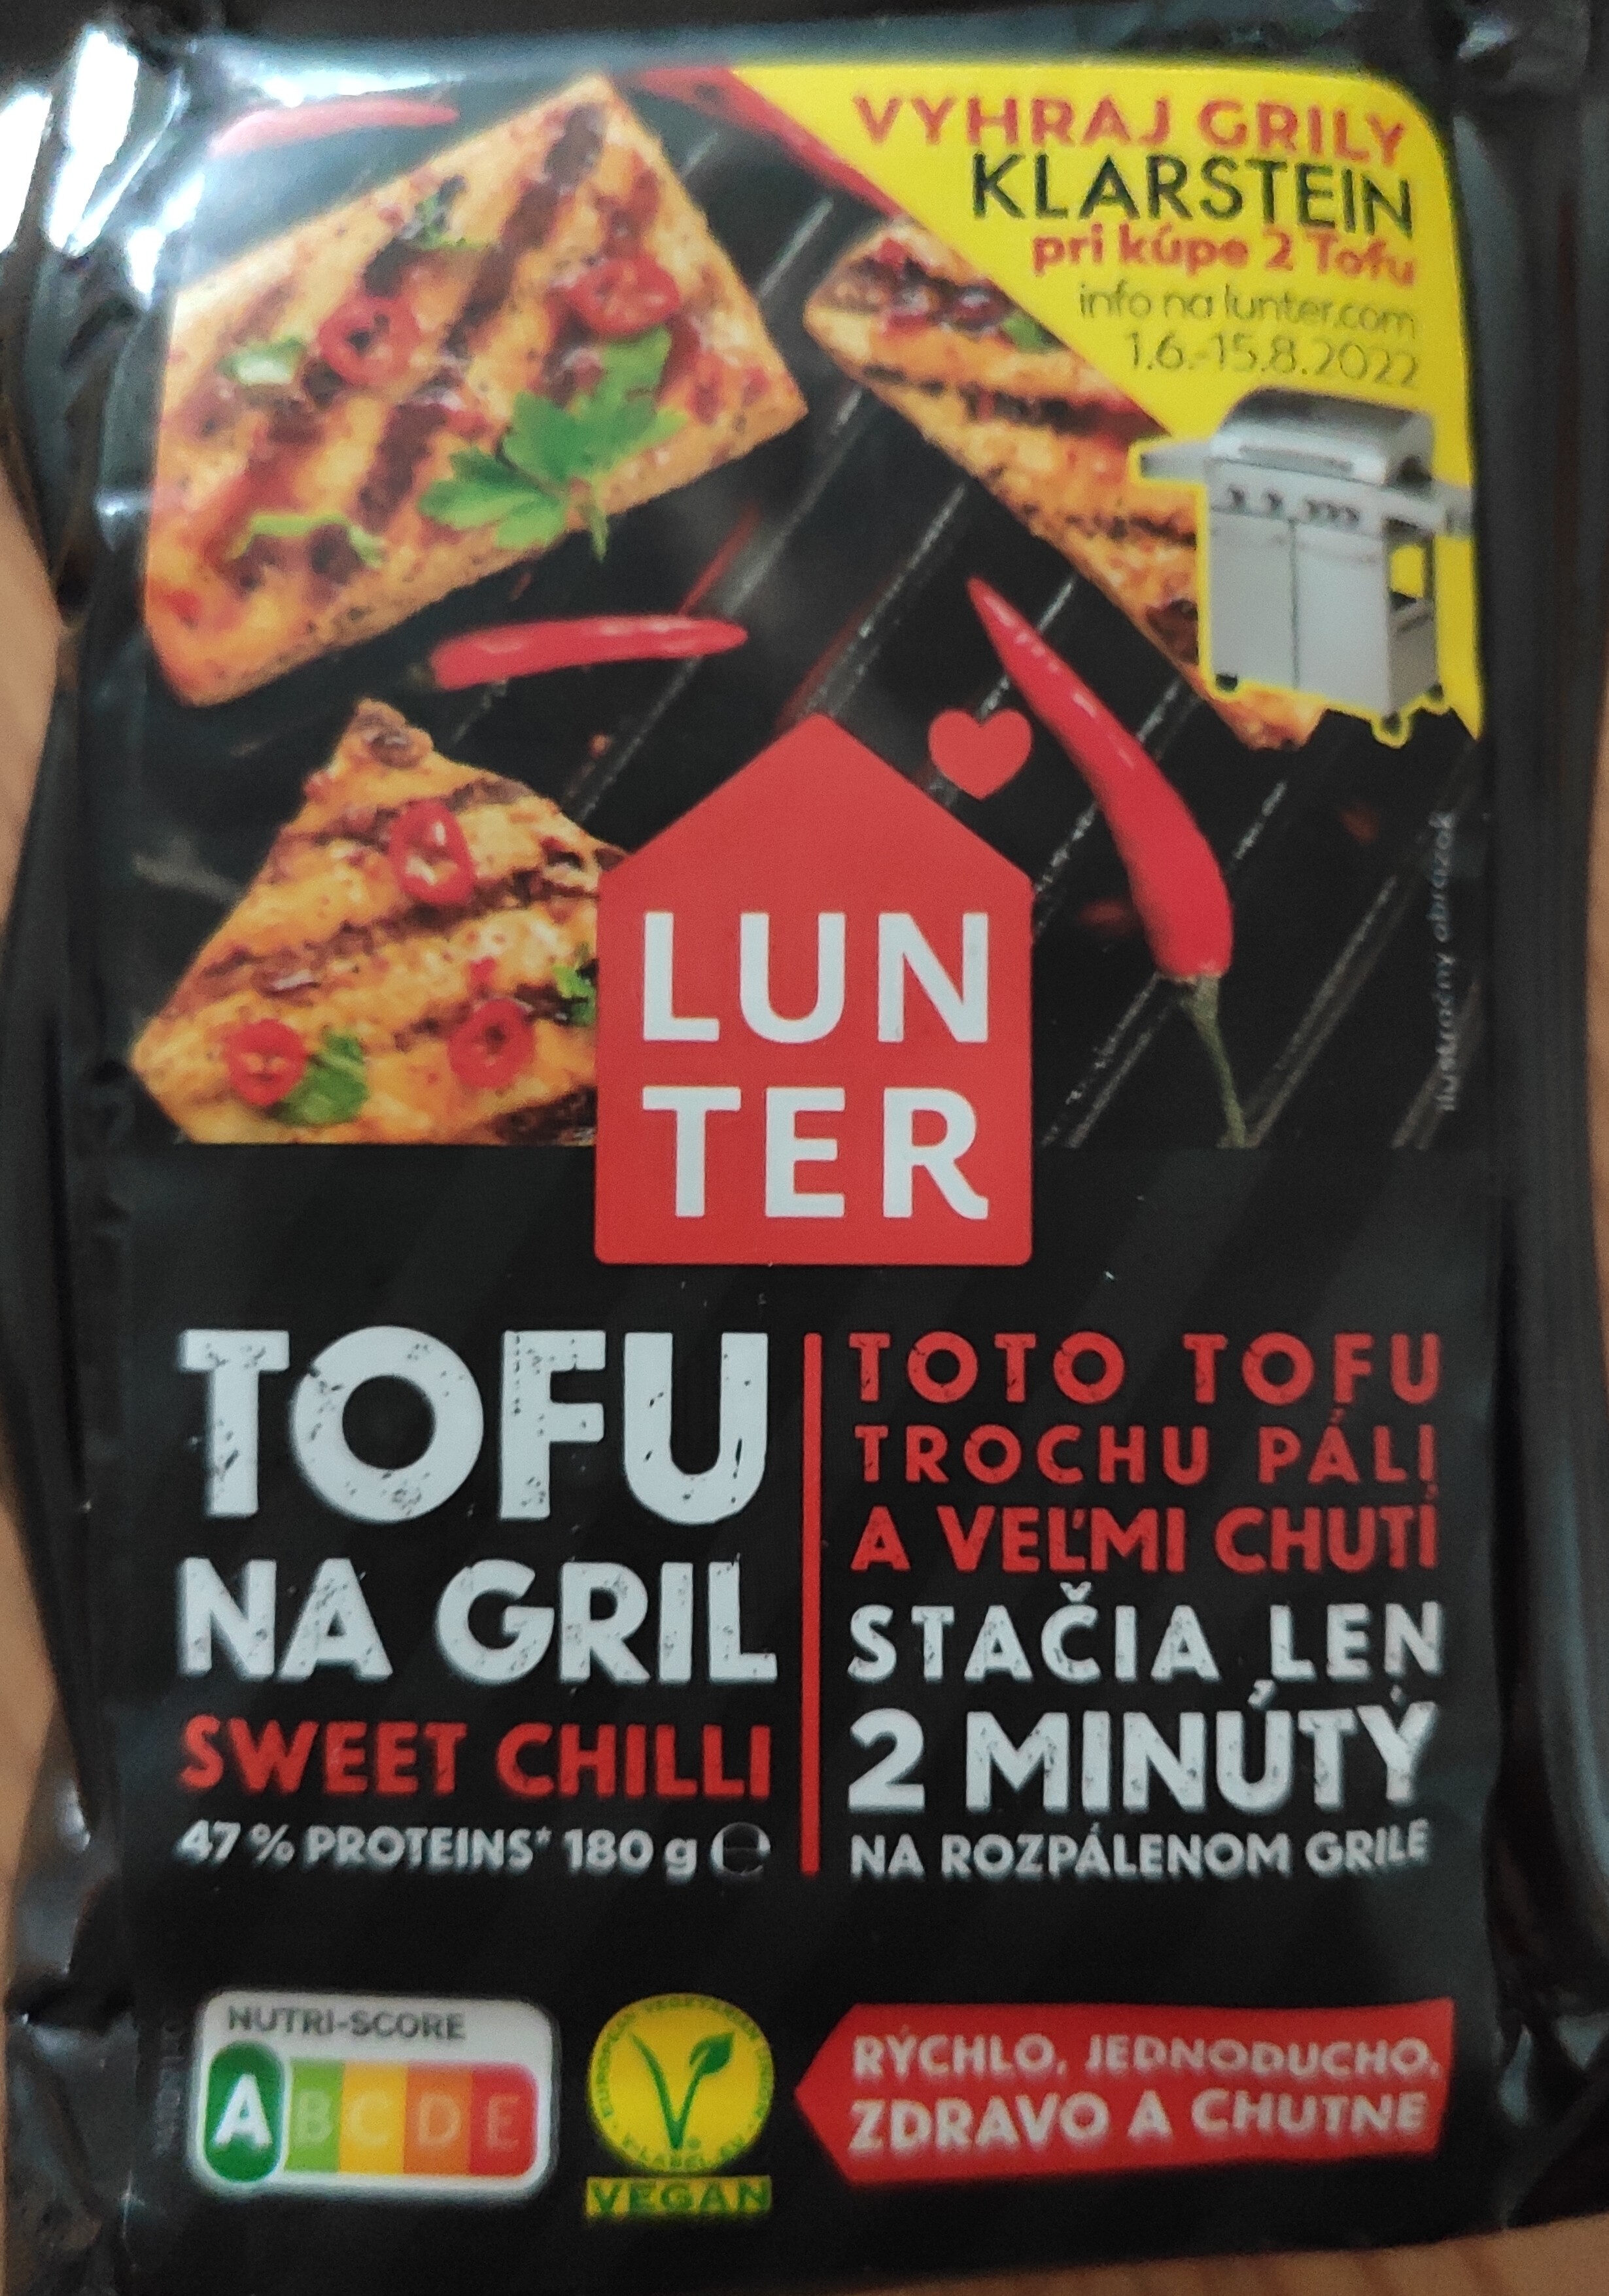 Tofu na gril - sweet chilli - Product - sk